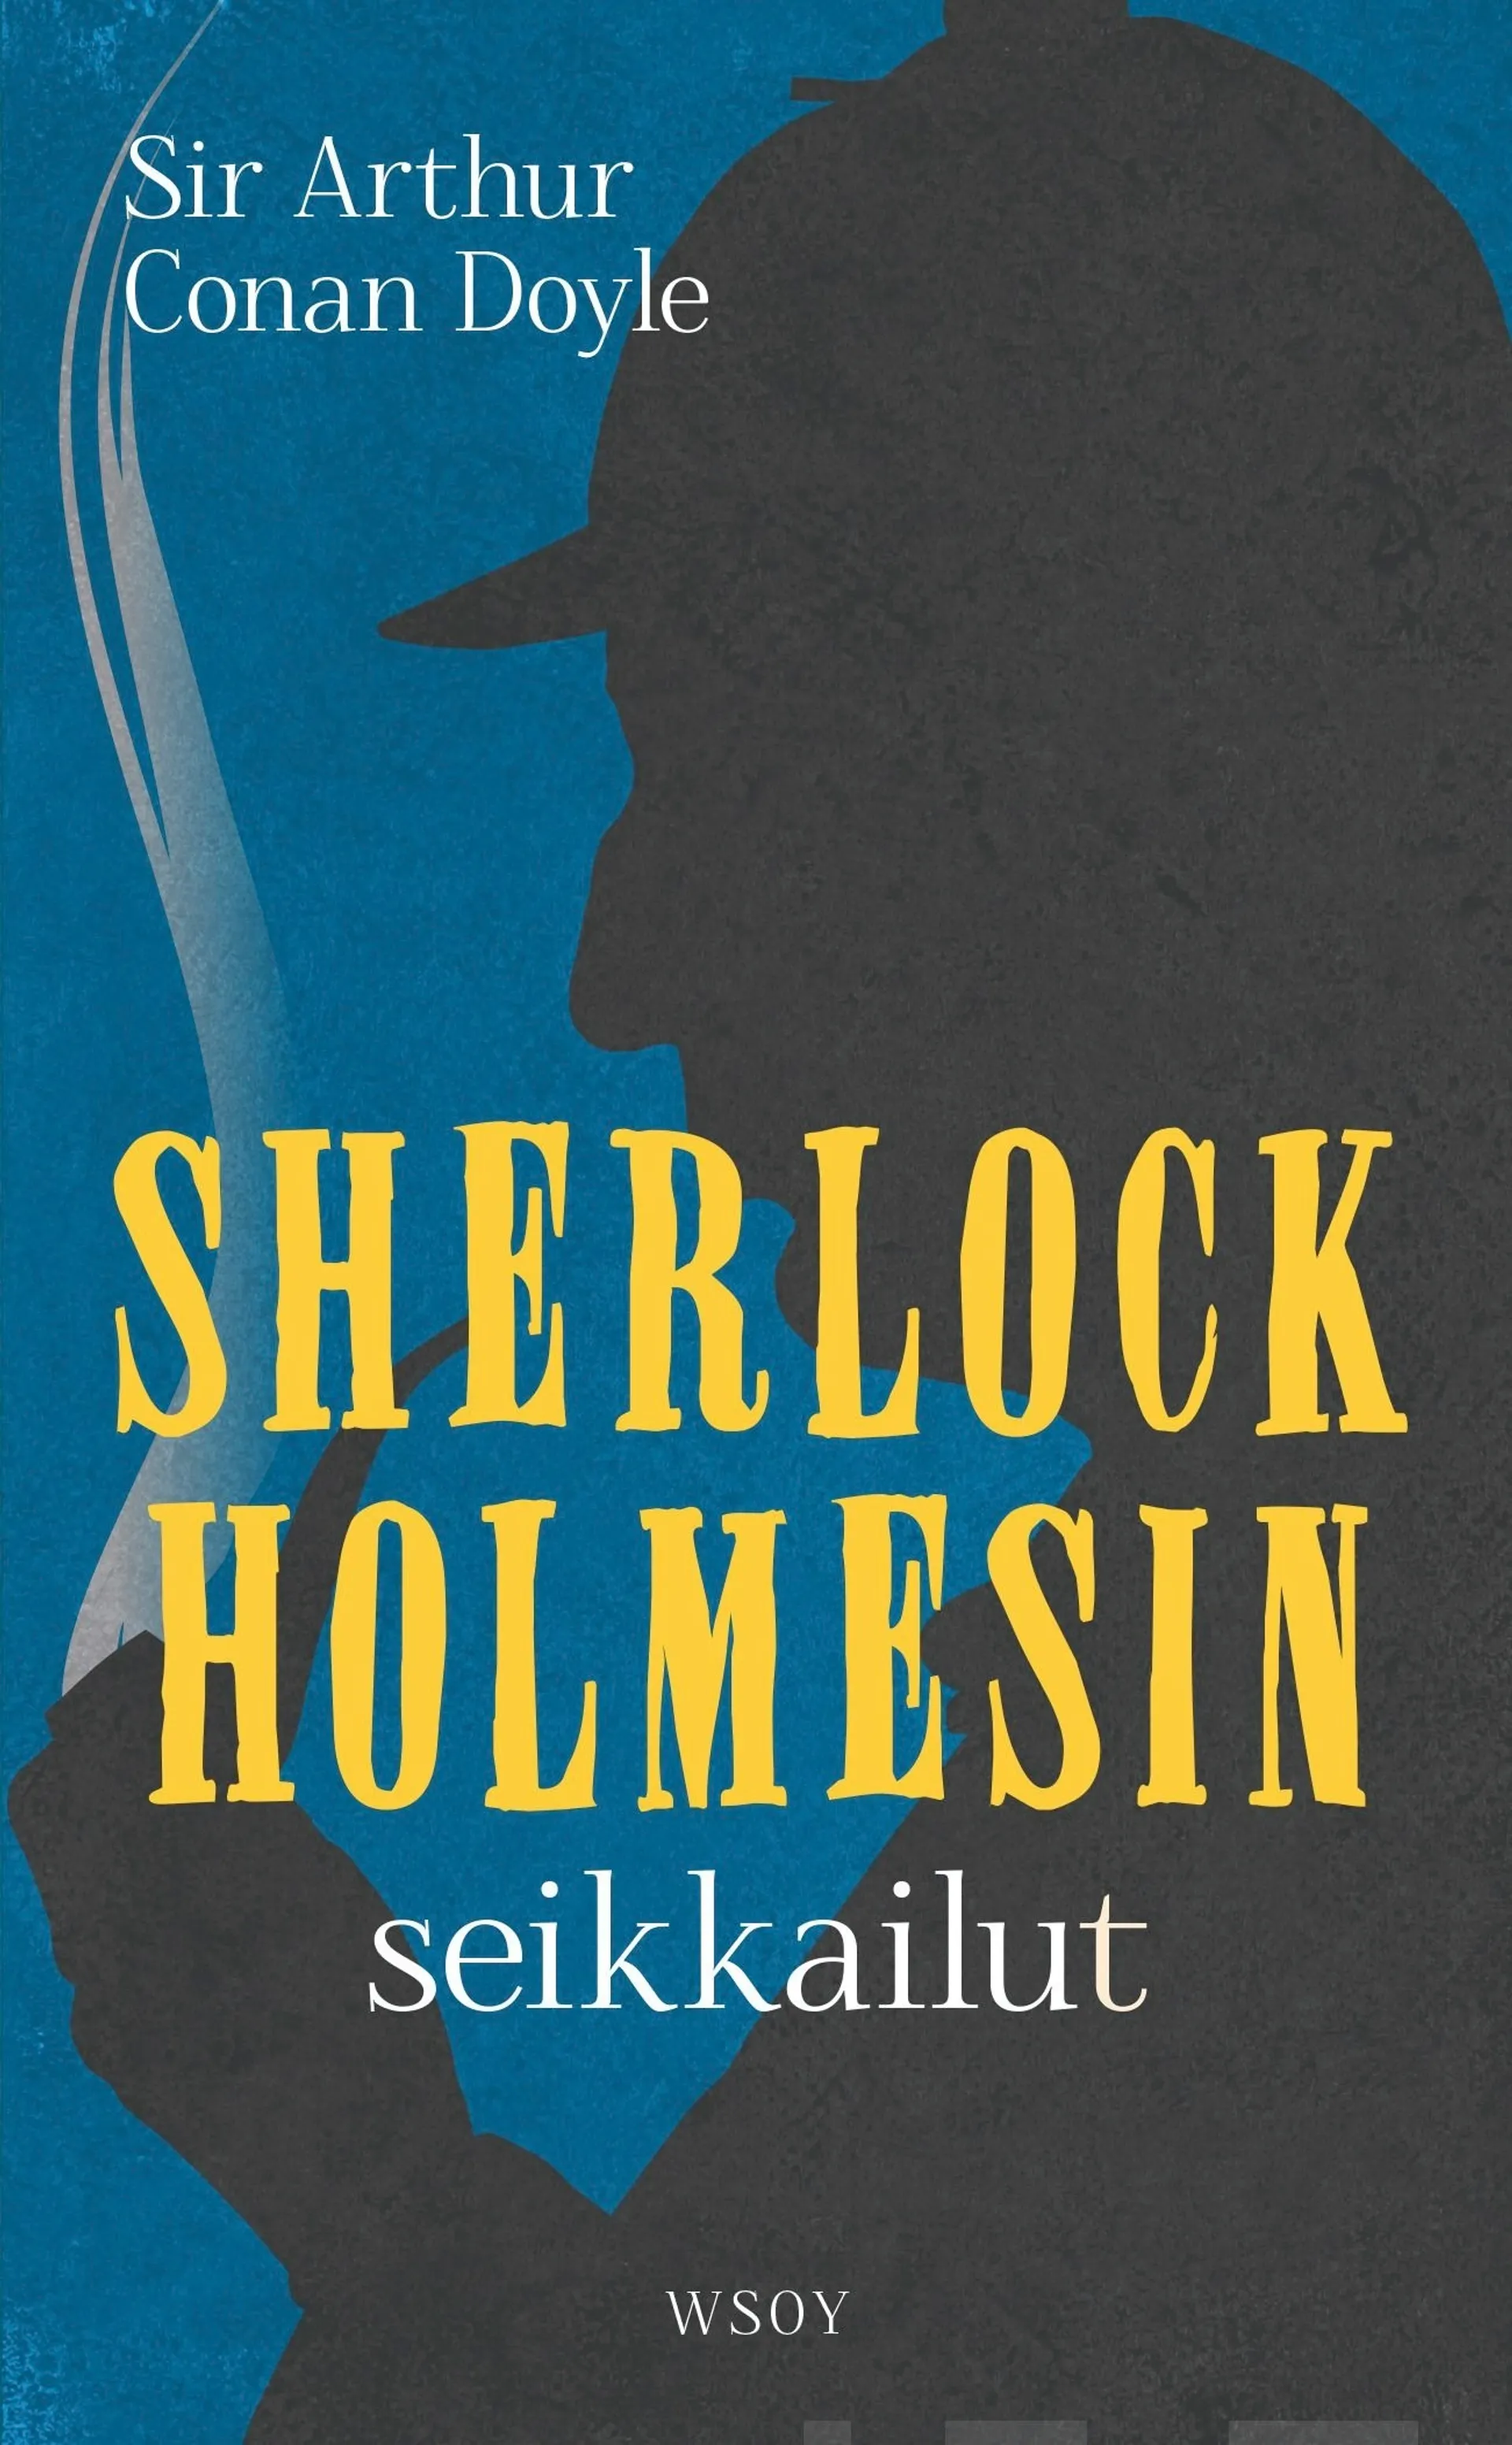 Conan Doyle, Sherlock Holmesin seikkailut